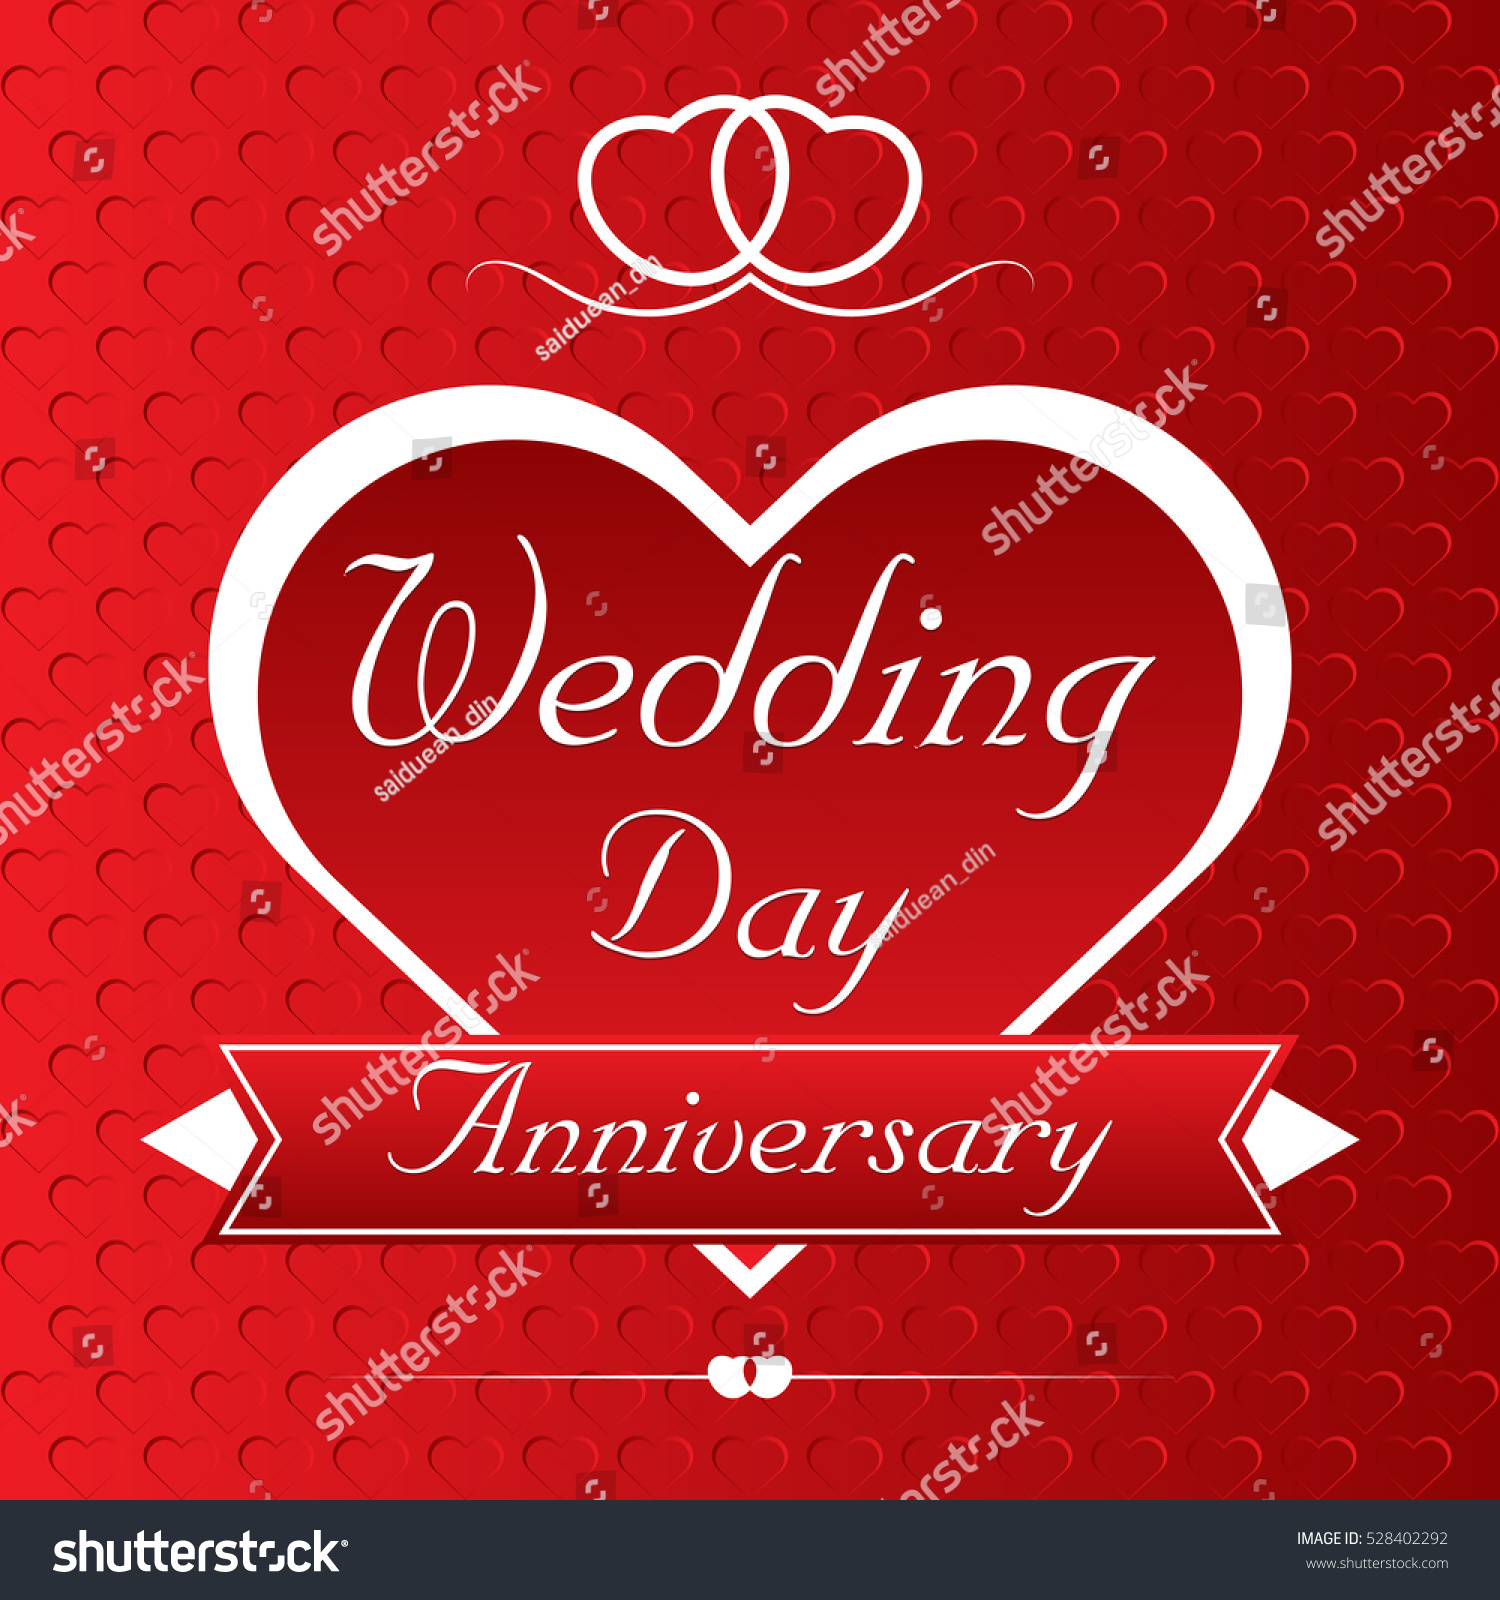  Wedding  Day Anniversary  Vector  Illustration Stock Vector  